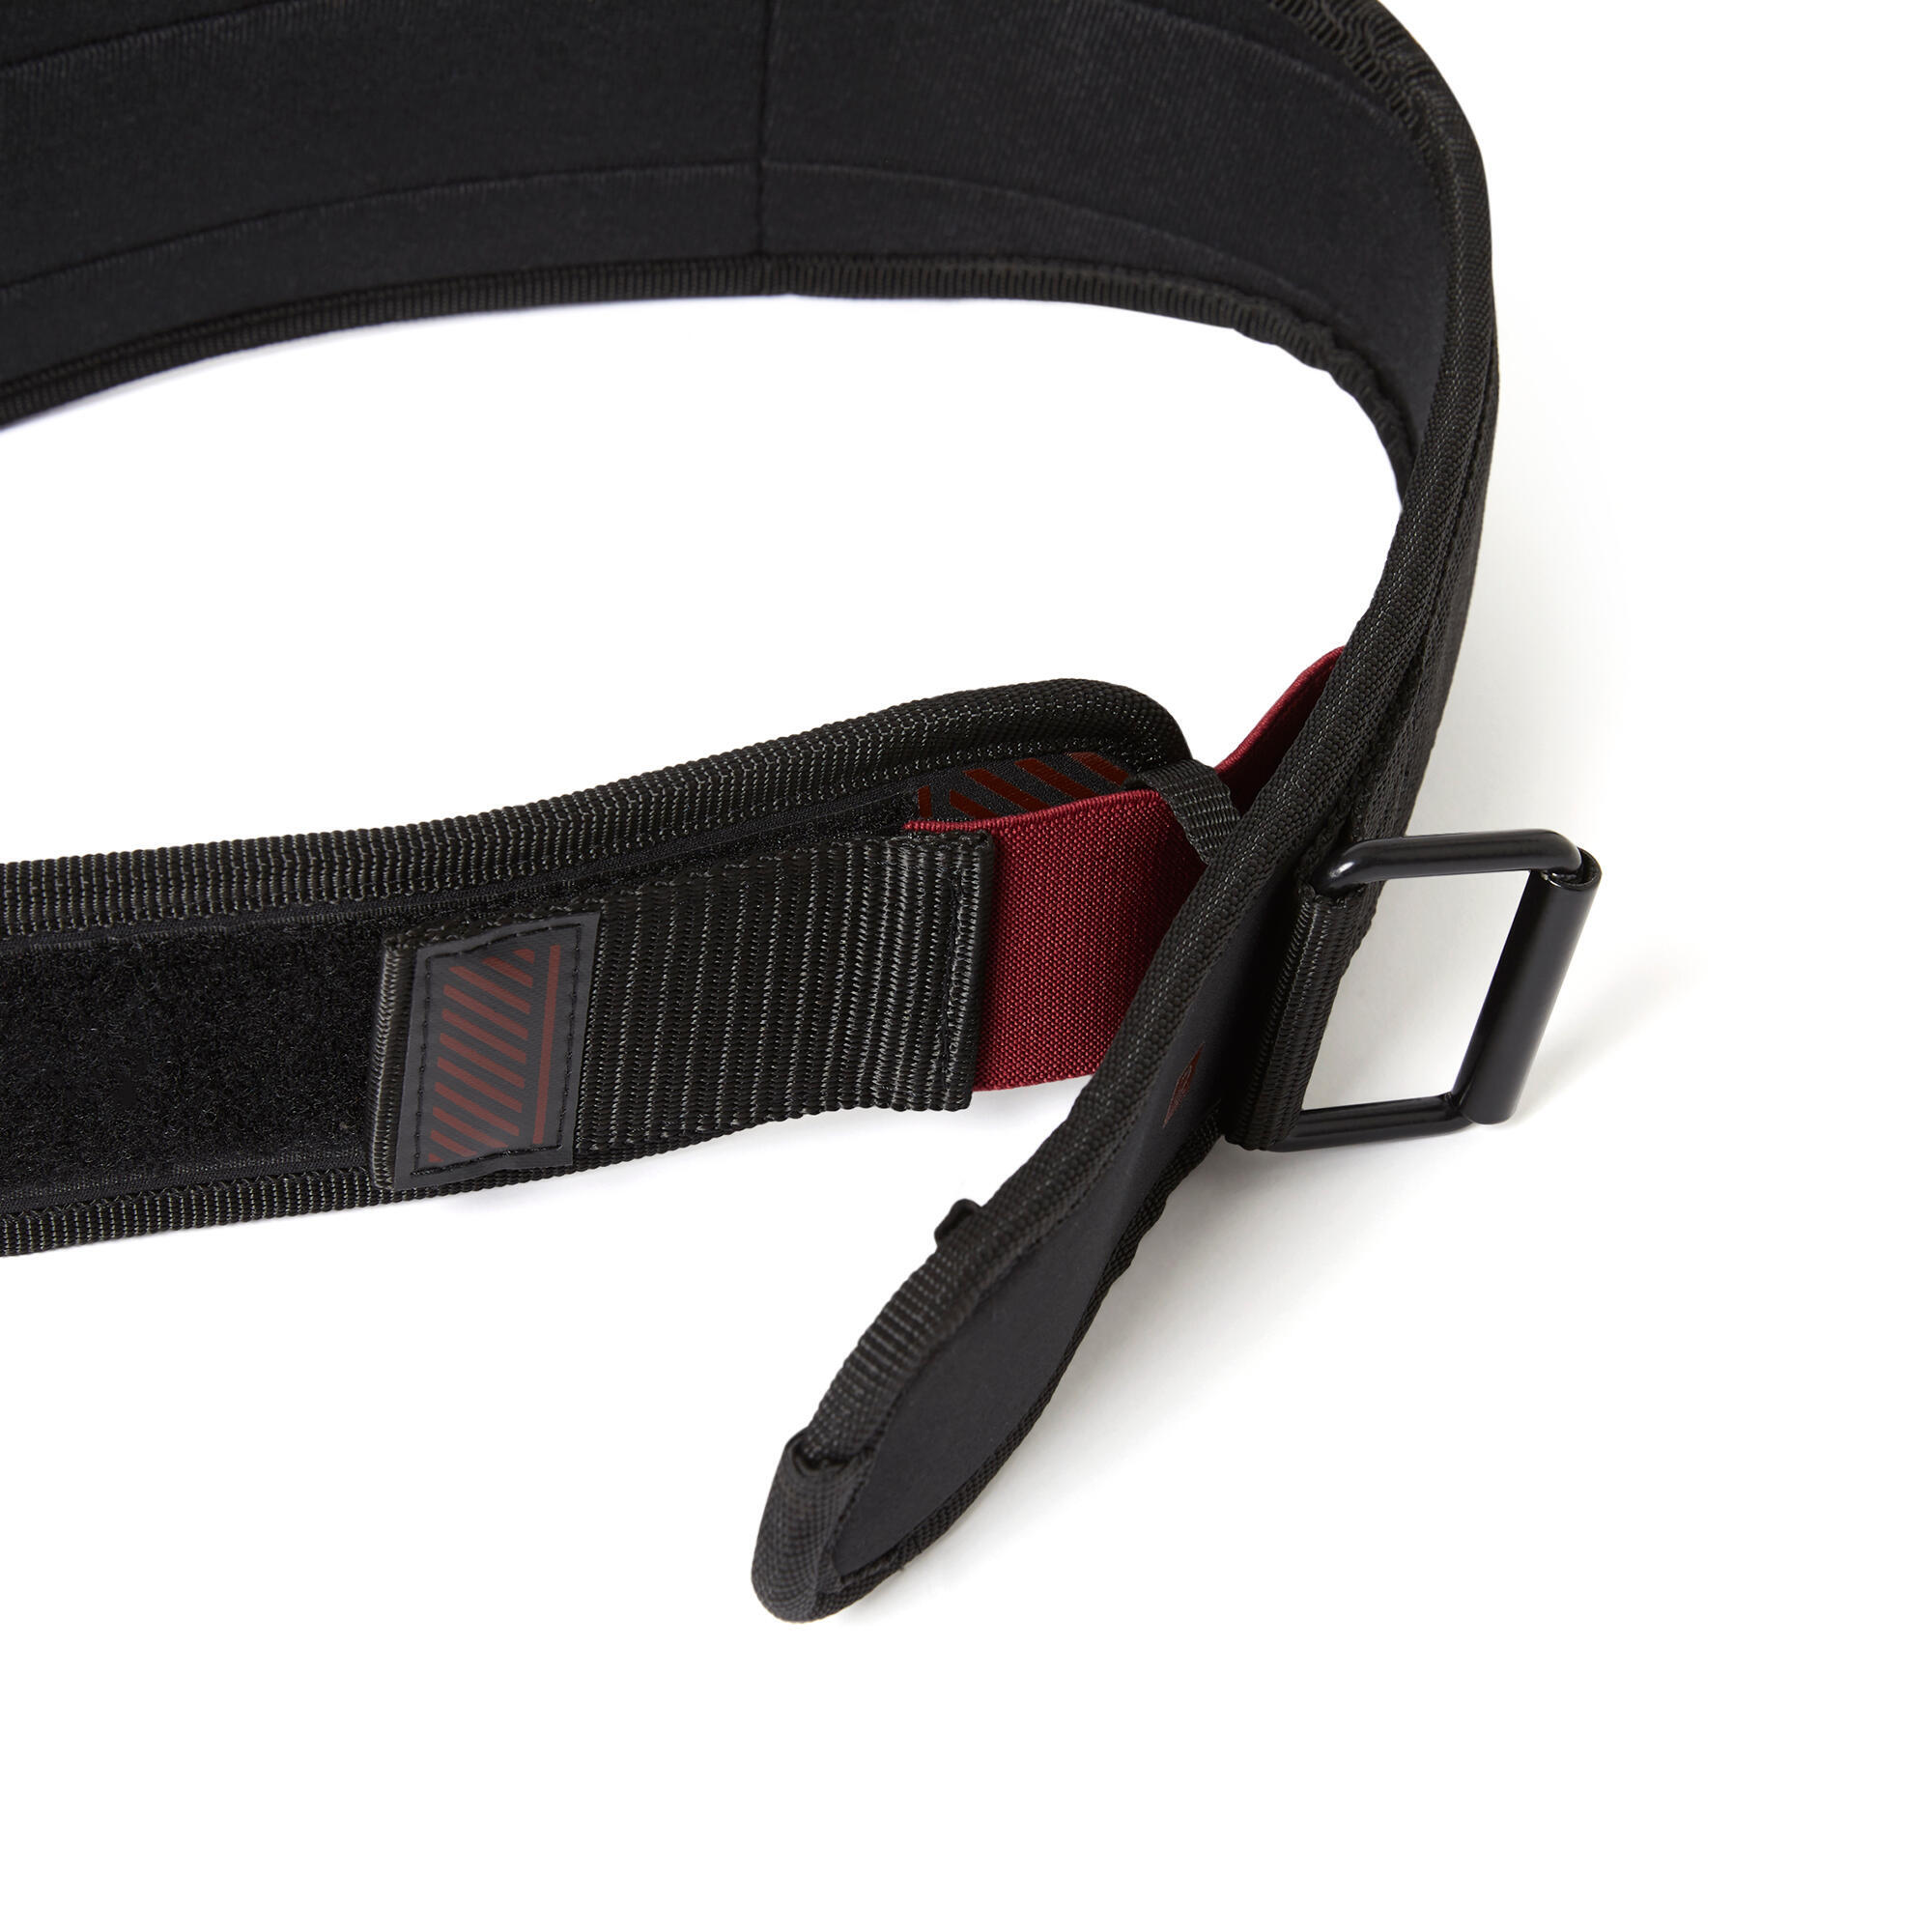 Weight Training Belt with Dual Nylon Closure - Black 4/5